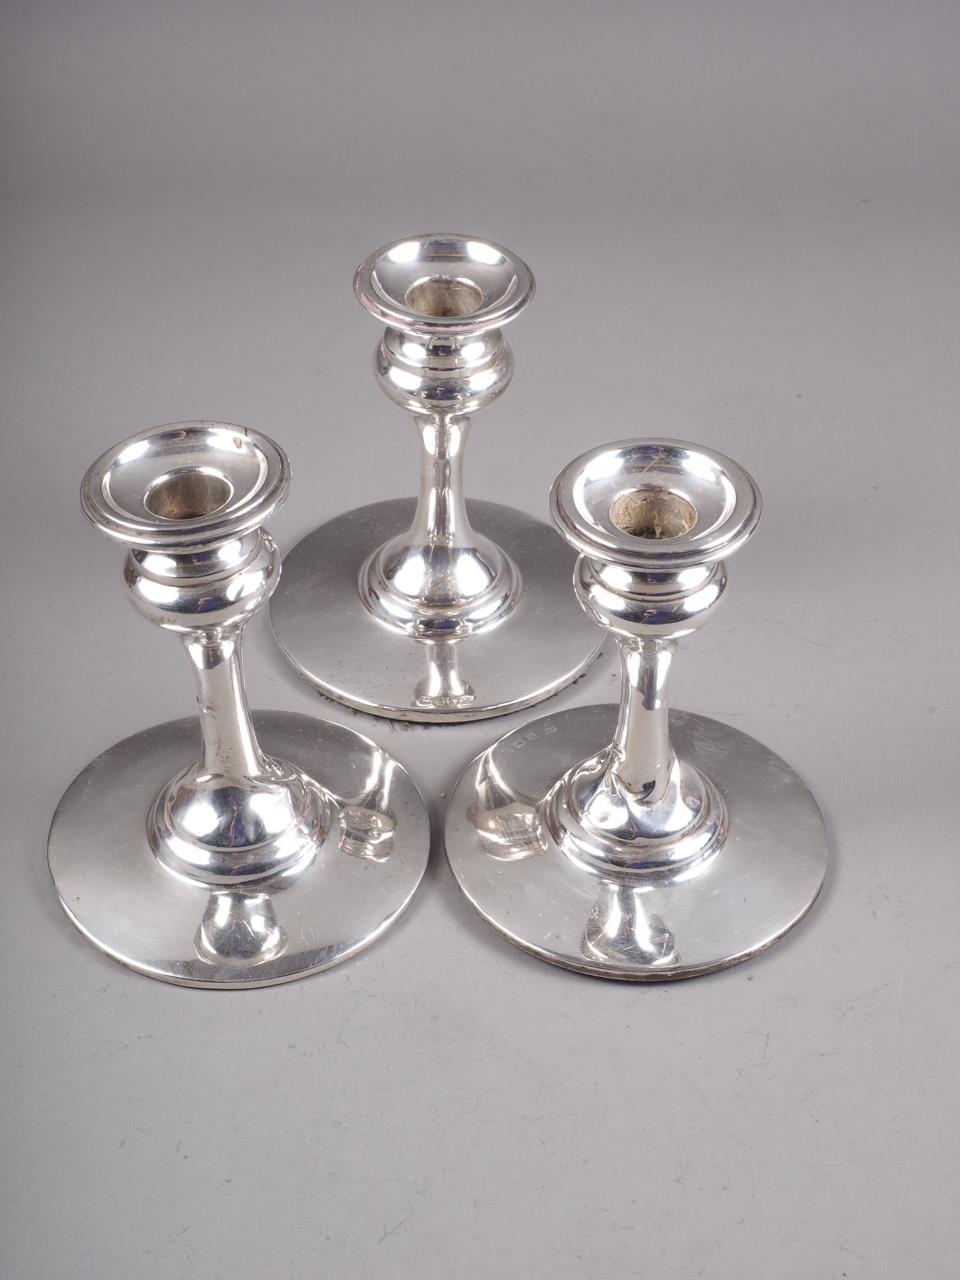 Three silver squat candlesticks, on plain circular bases, 5" high - Image 2 of 3